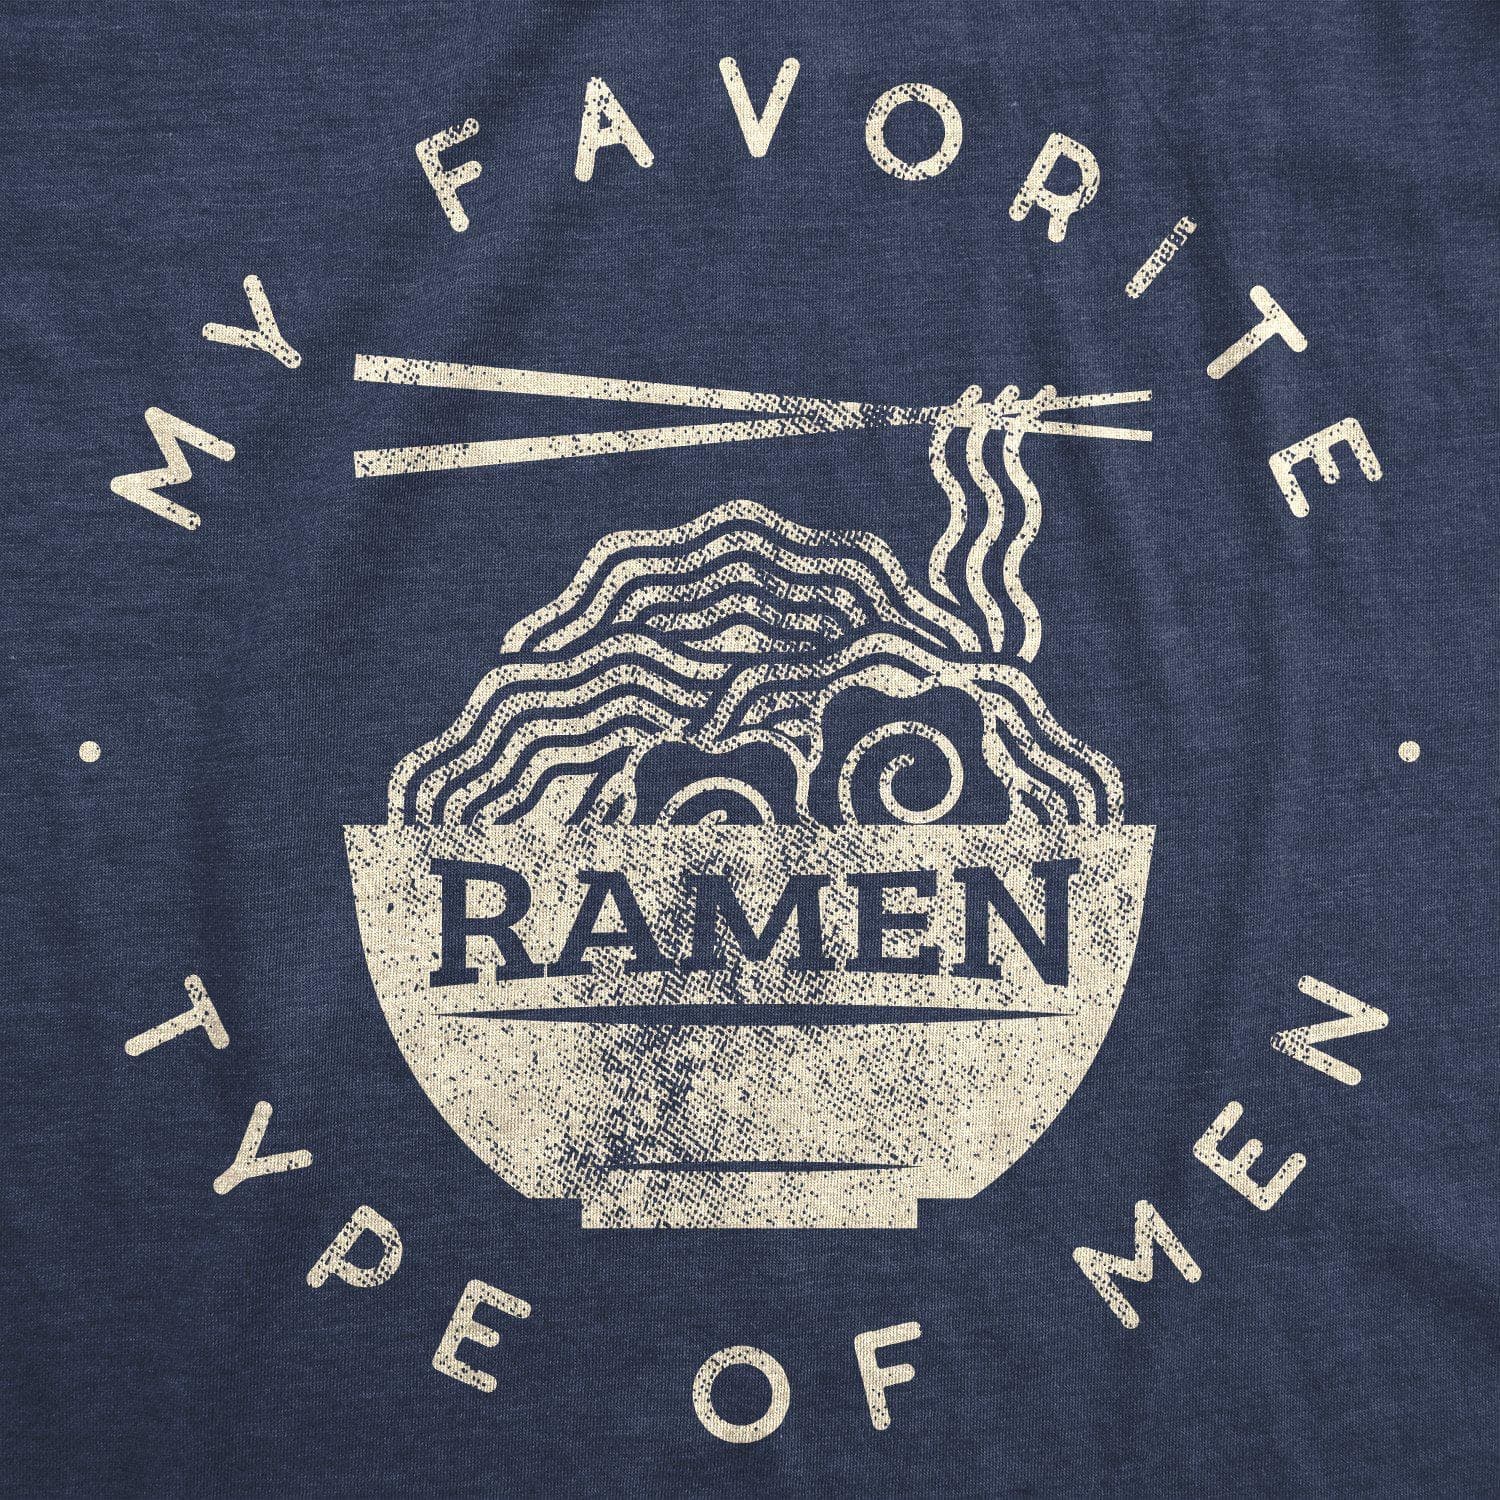 My Favorite Type Of Ramen Is Men Men's Tshirt - Crazy Dog T-Shirts